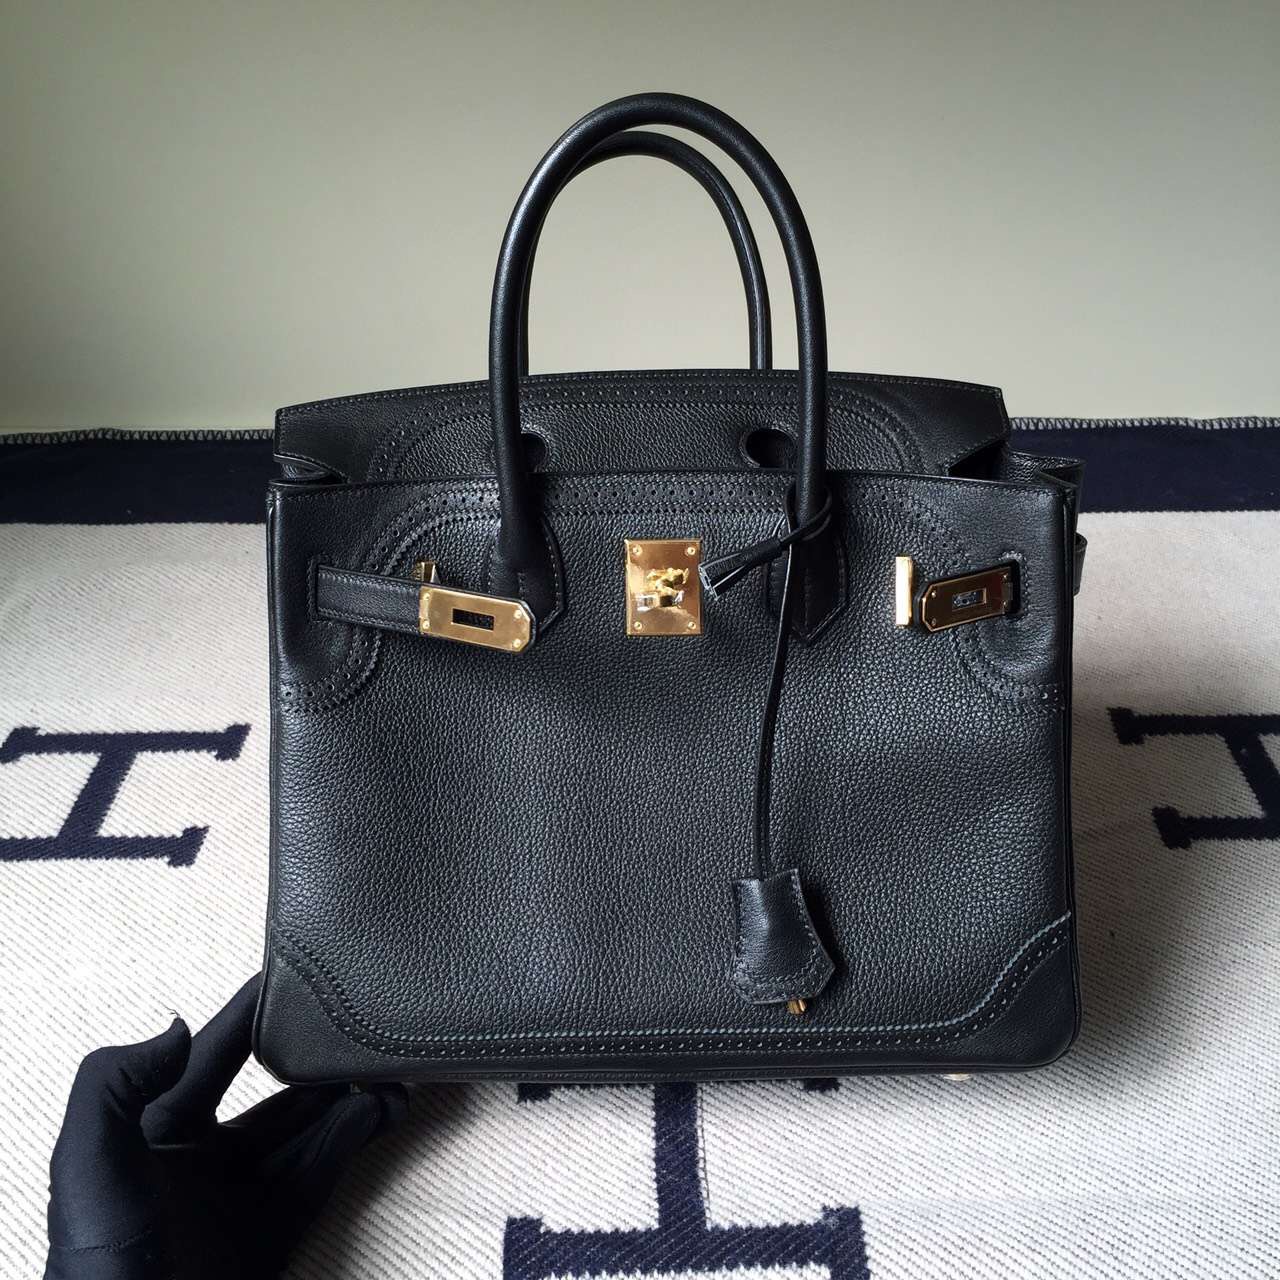 Wholesale Hermes Black Togo Leather&#038;Swift Leather Ghillies Birkin Bag 30cm